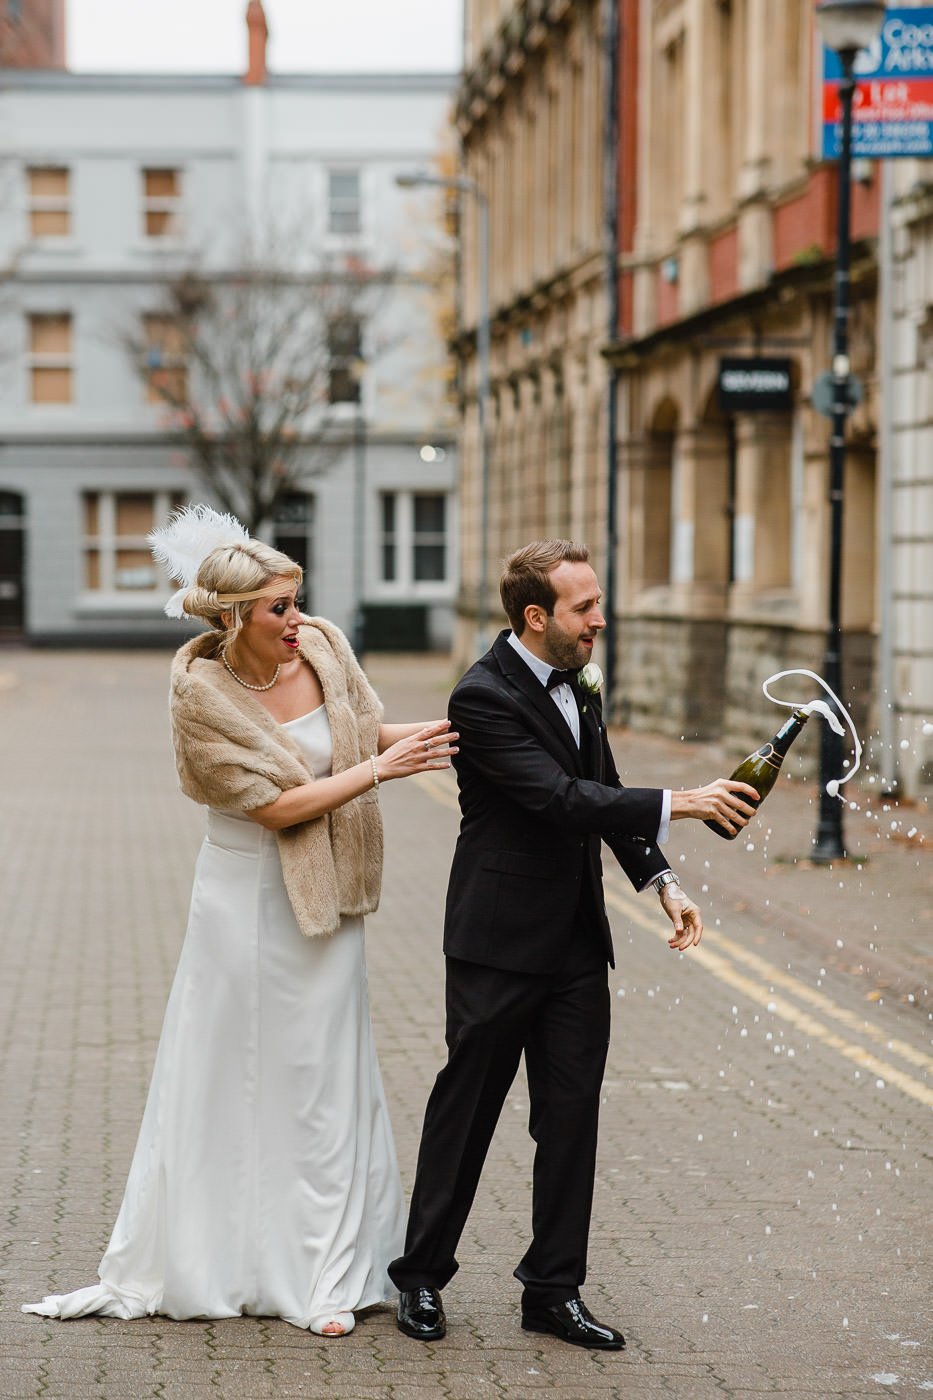 20-bride-groom-shaking-champagne-just-married-cardiff.jpg